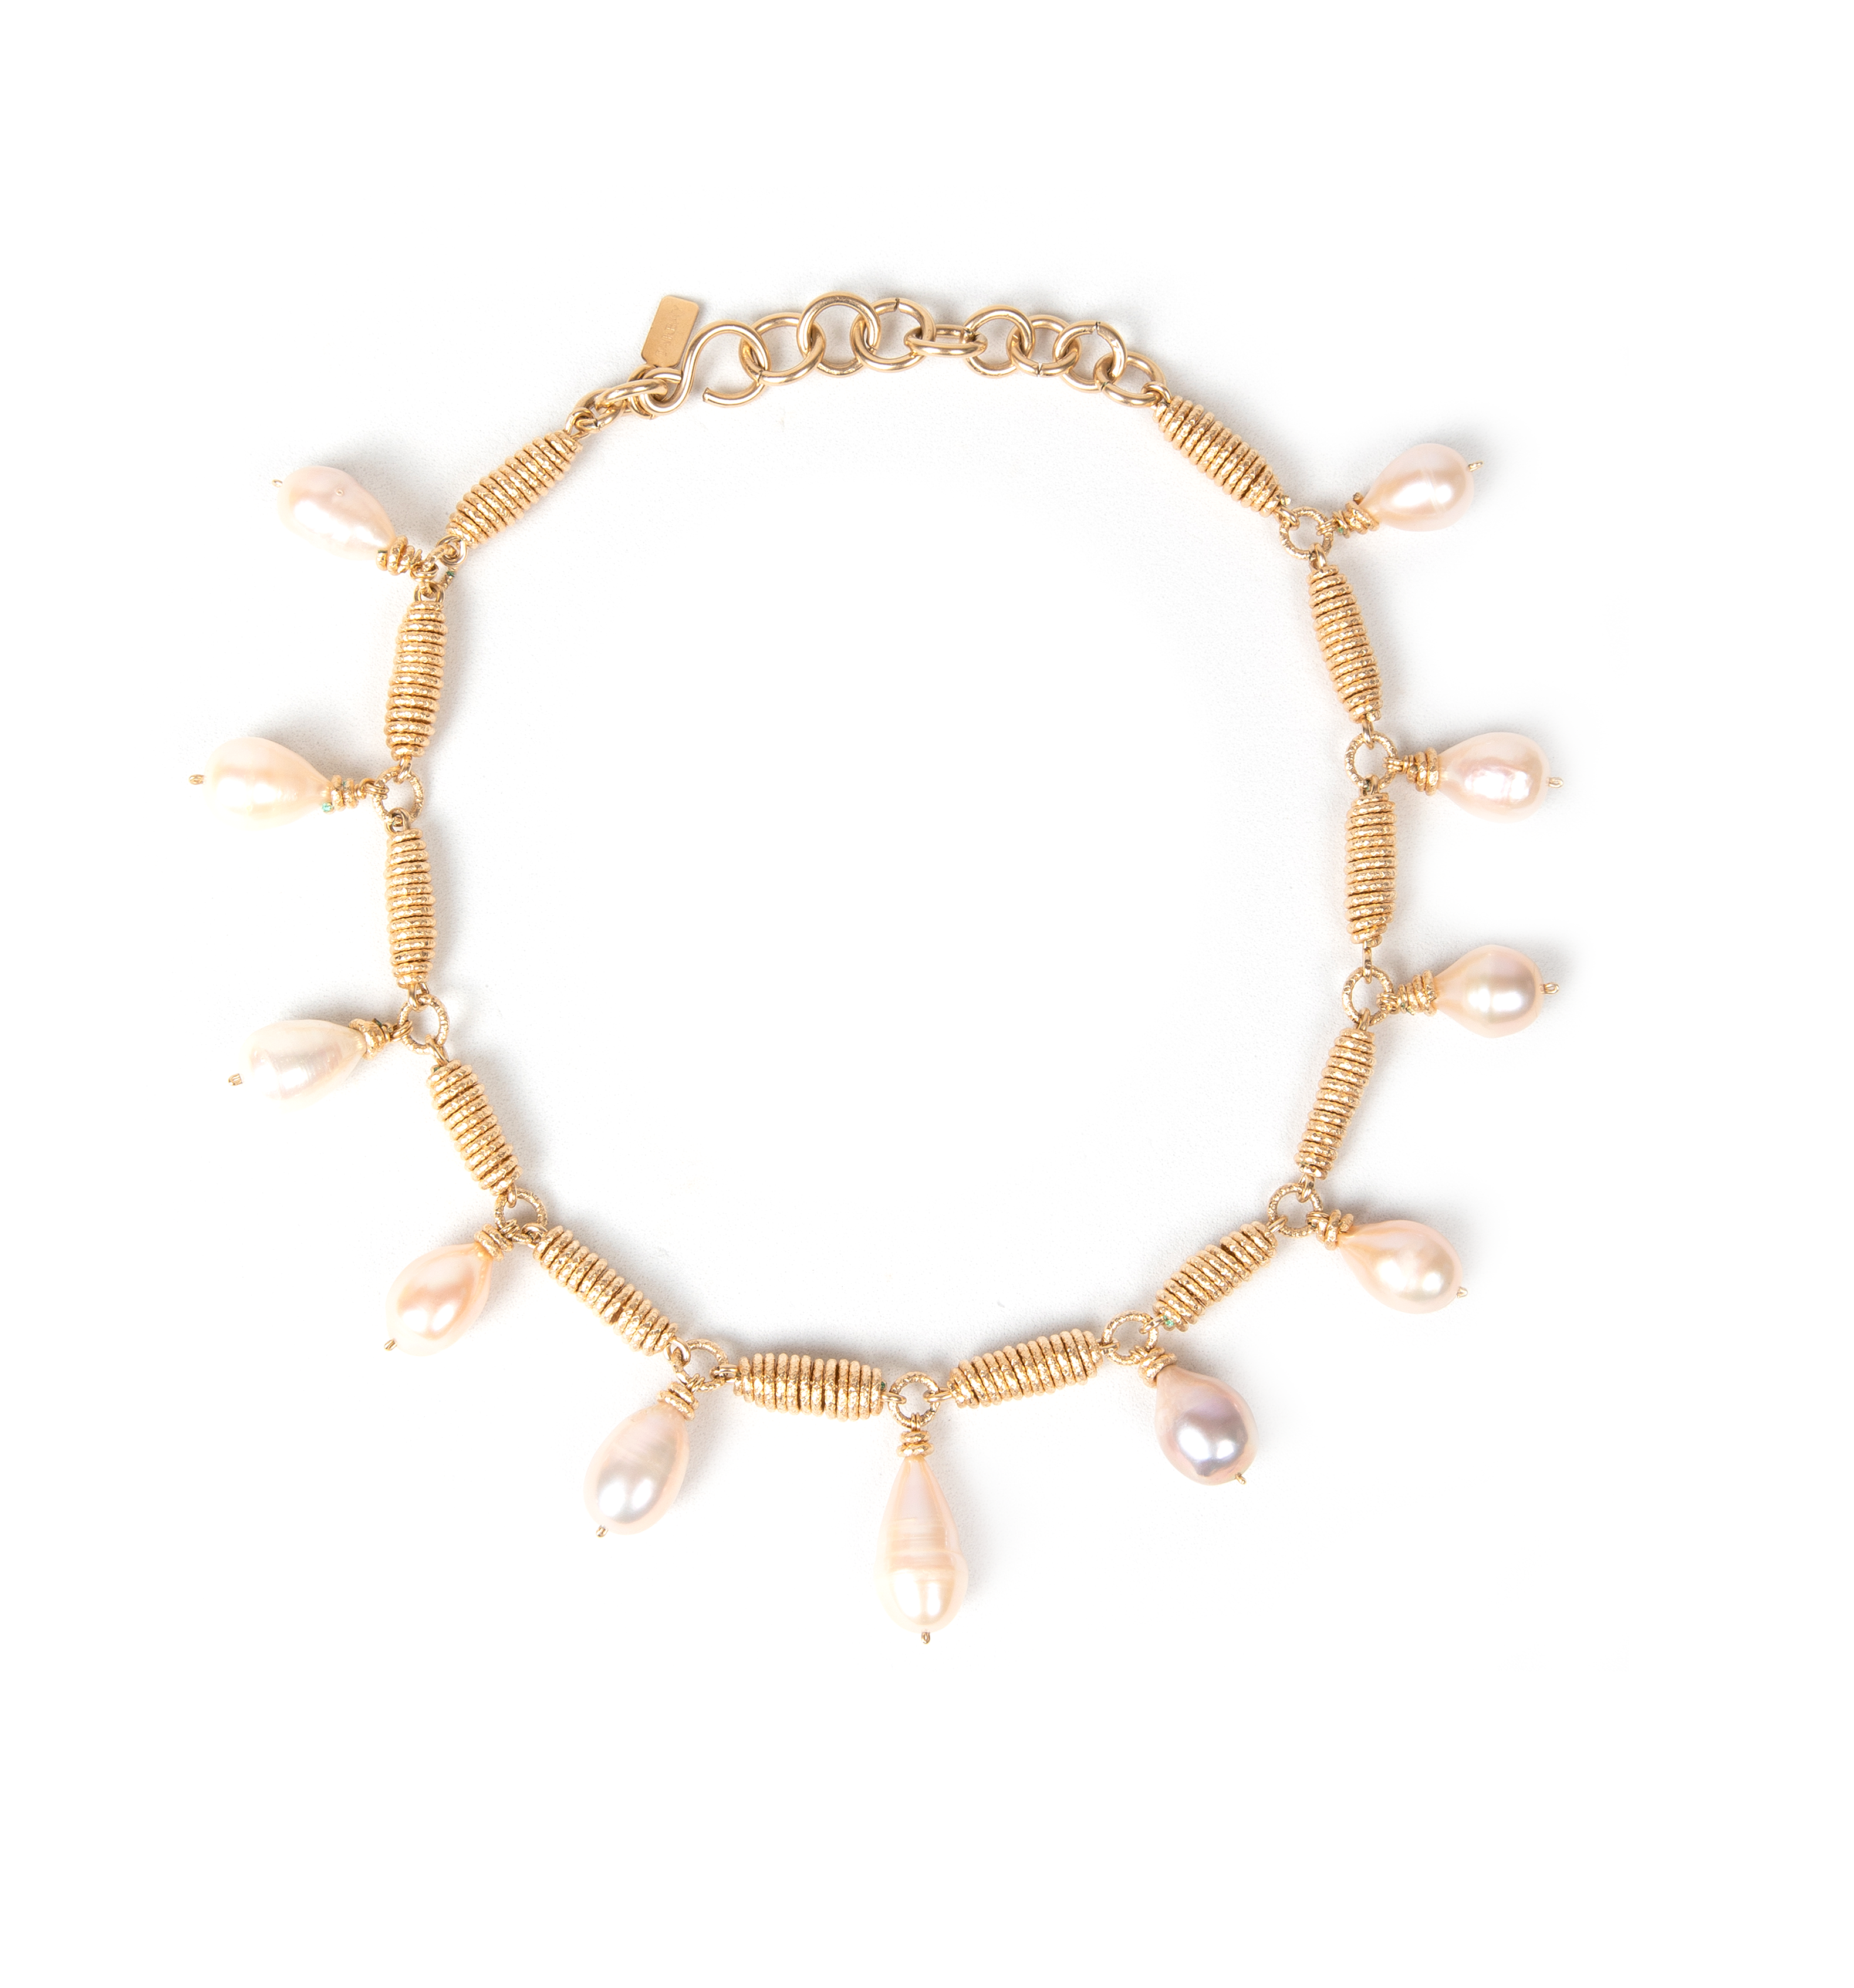 Pergamino Necklace #3 - Pearl Necklaces TARBAY   